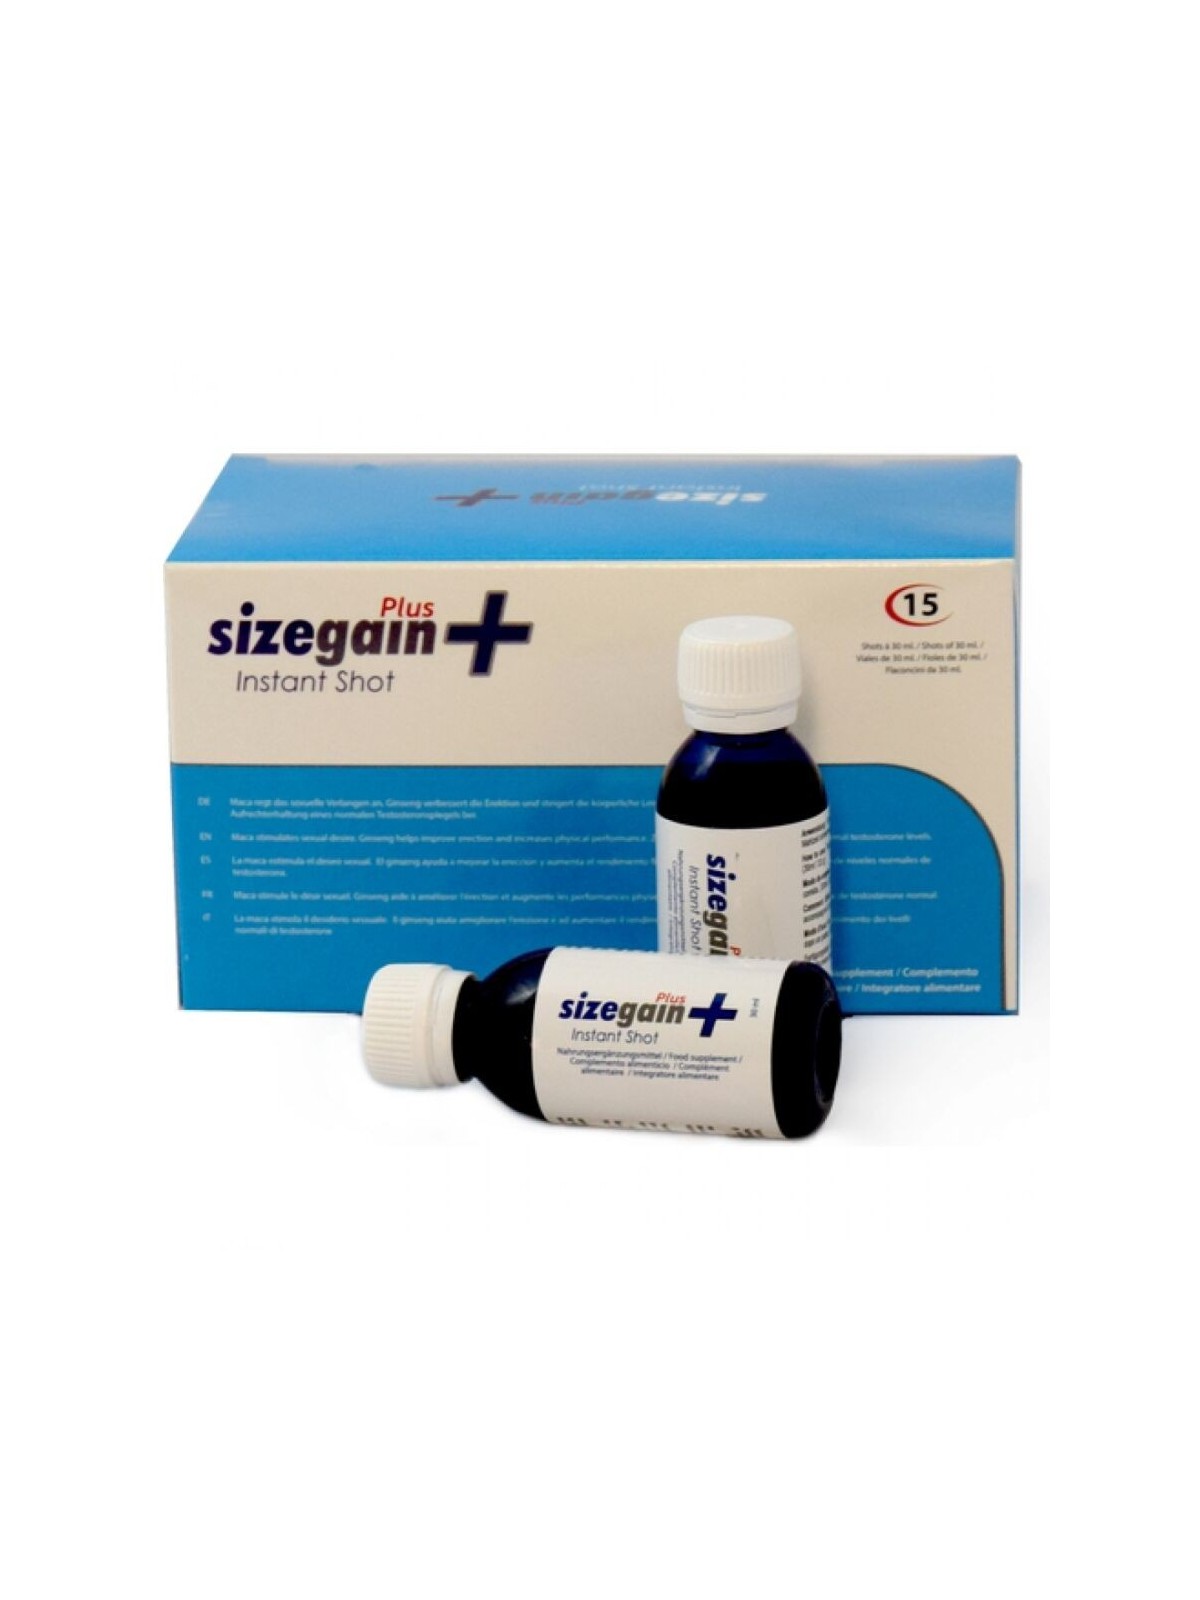 Sizegain Plus Instant Shot 15 Viales - Comprar Cápsulas aumento pene 500Cosmetics - Cápsulas aumento pene (1)